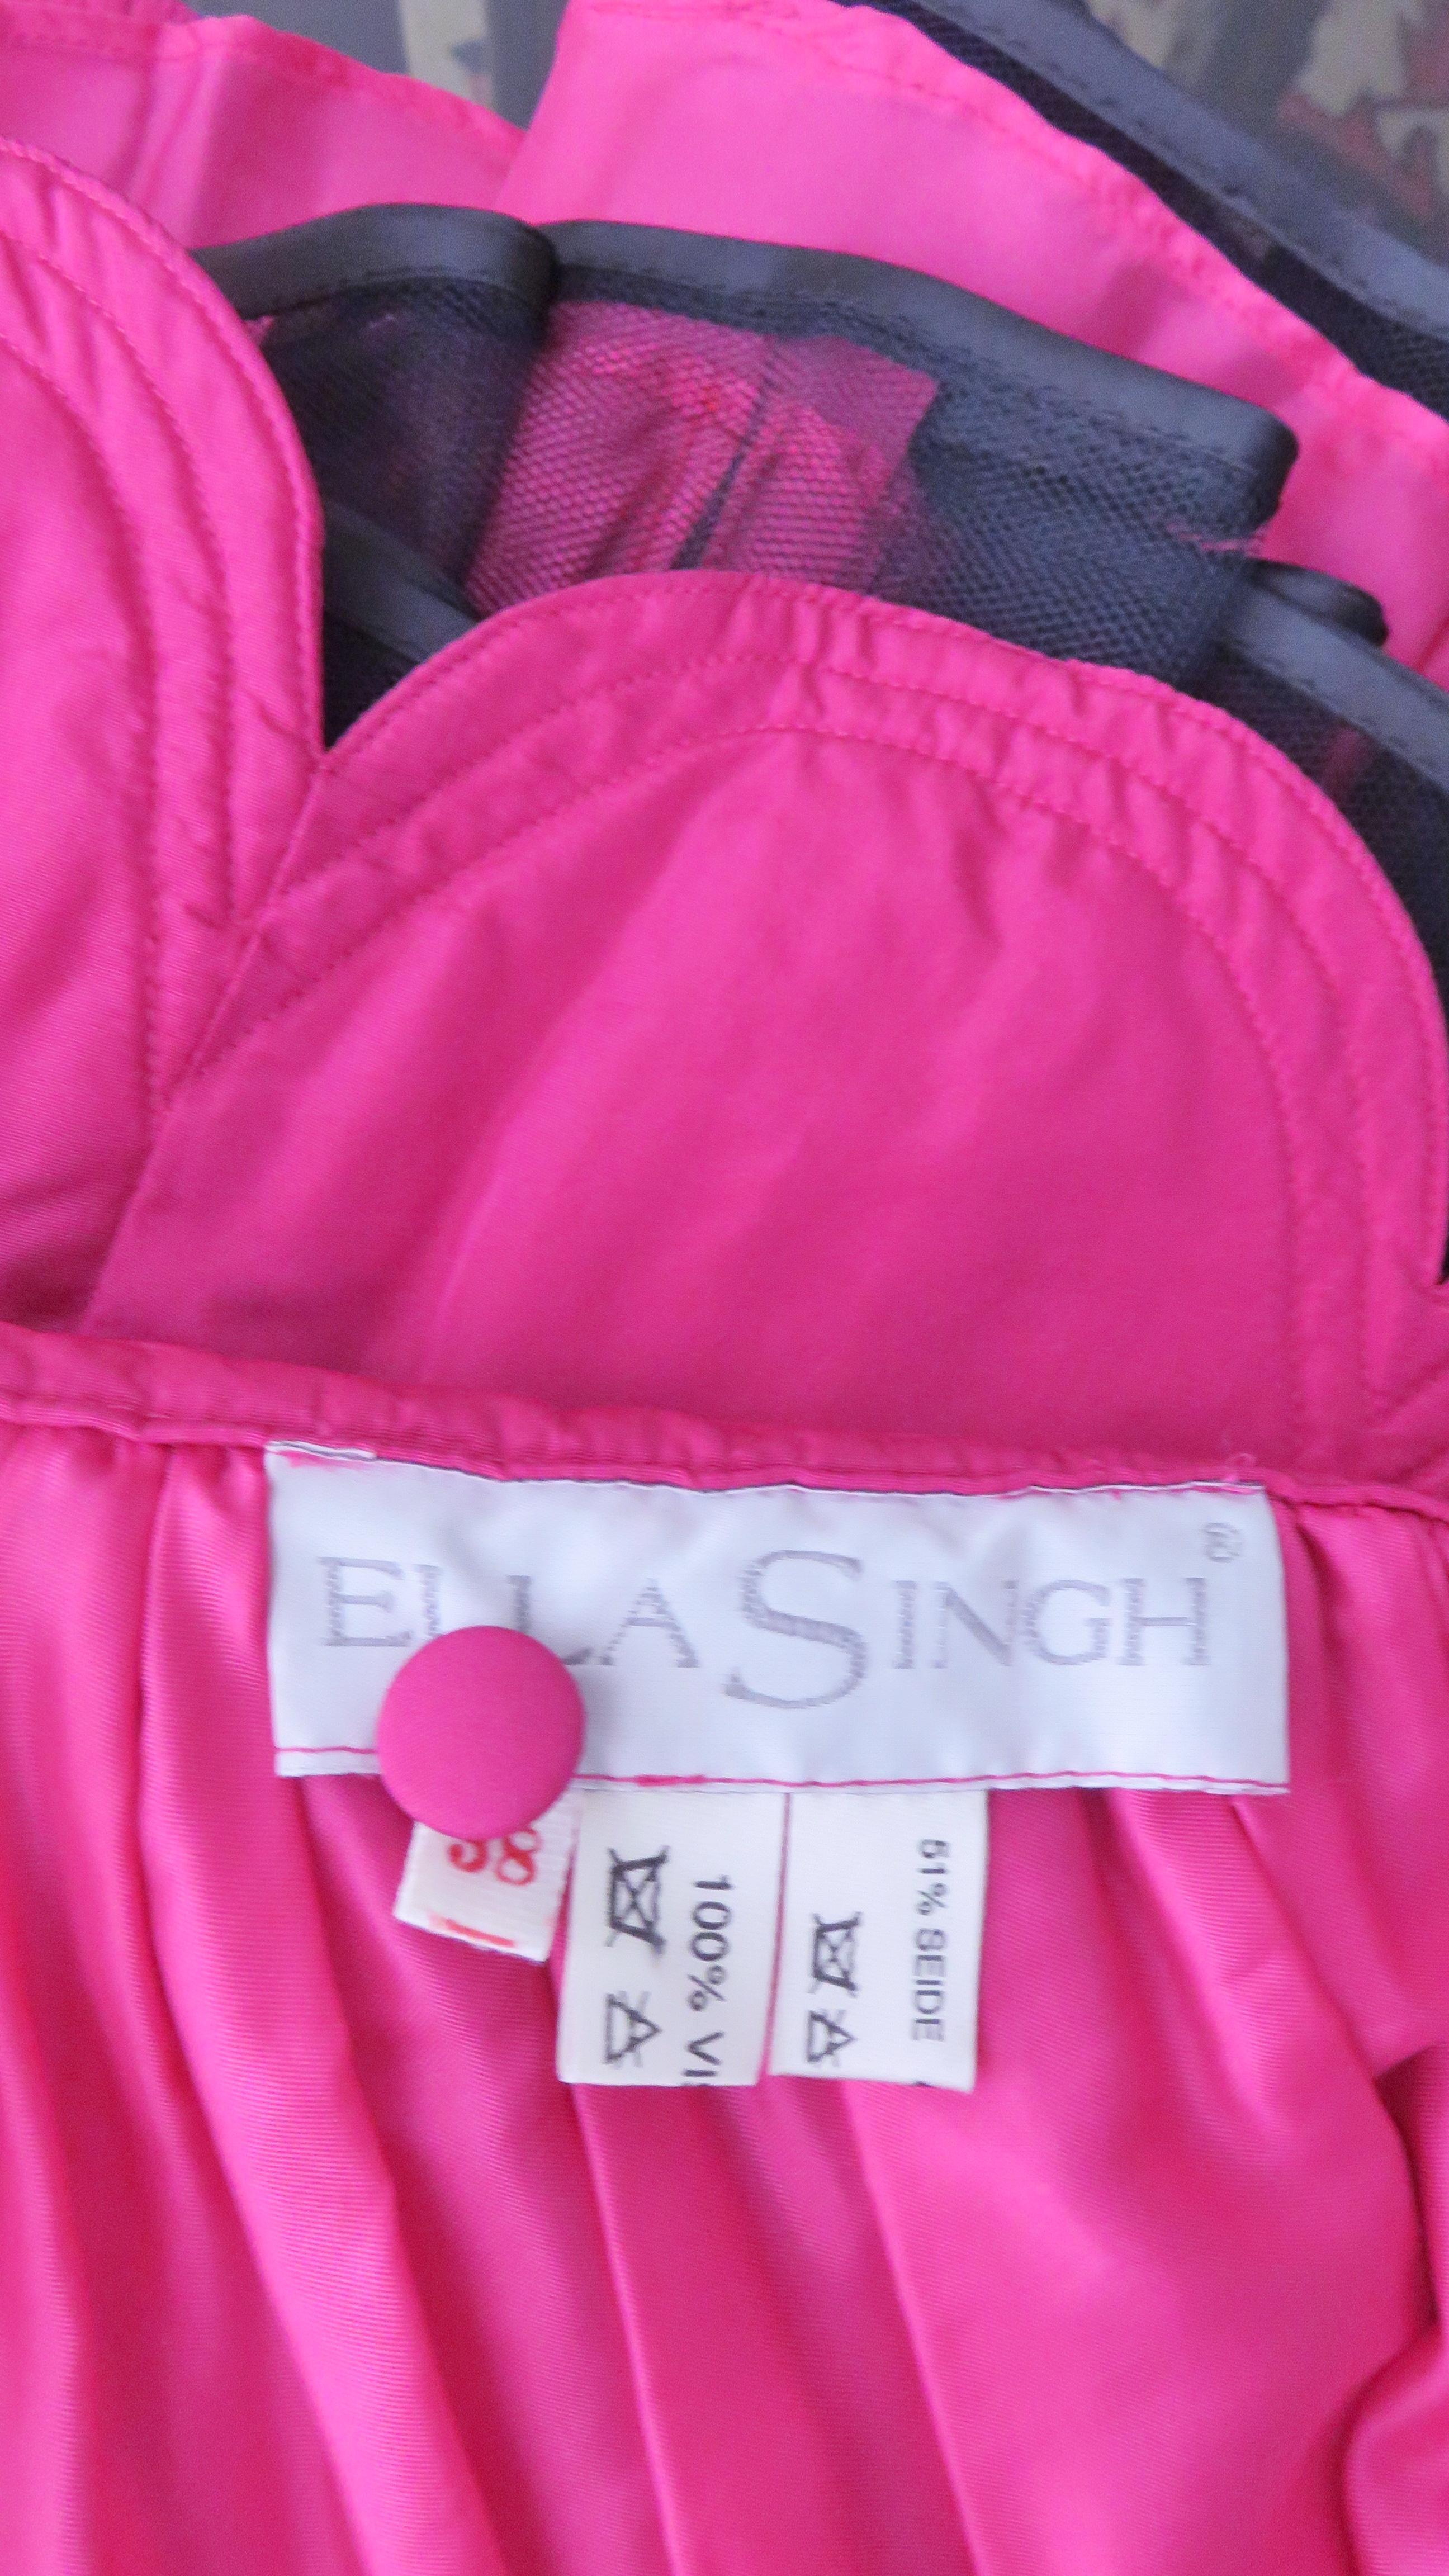 Ella Singh New Silk Full Skirt with Scallop Hem 13